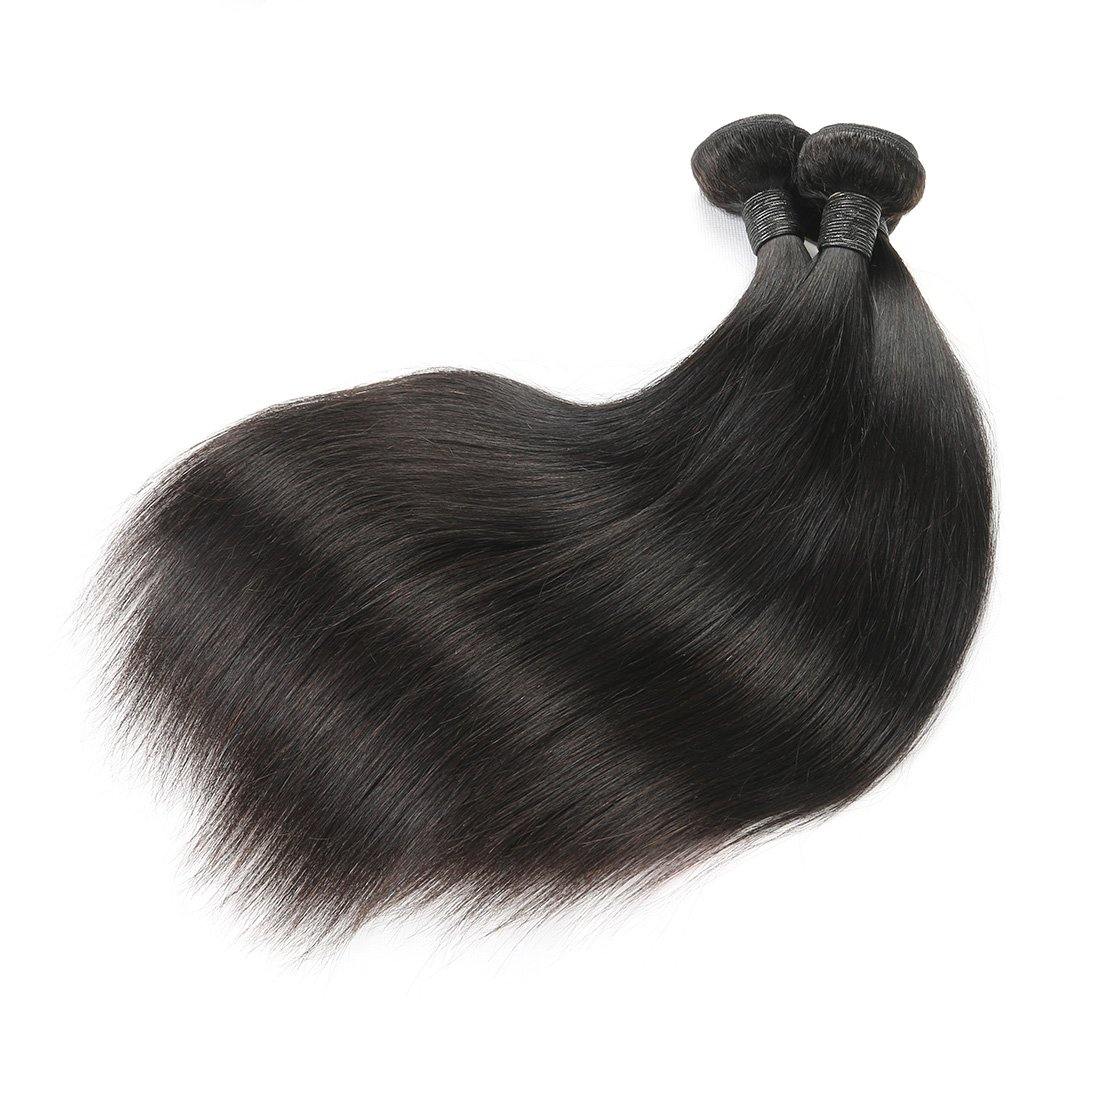 Brazilian Straight Hair 3 Bundles 100% Human Hair Extension Weaves - Seyna Hair